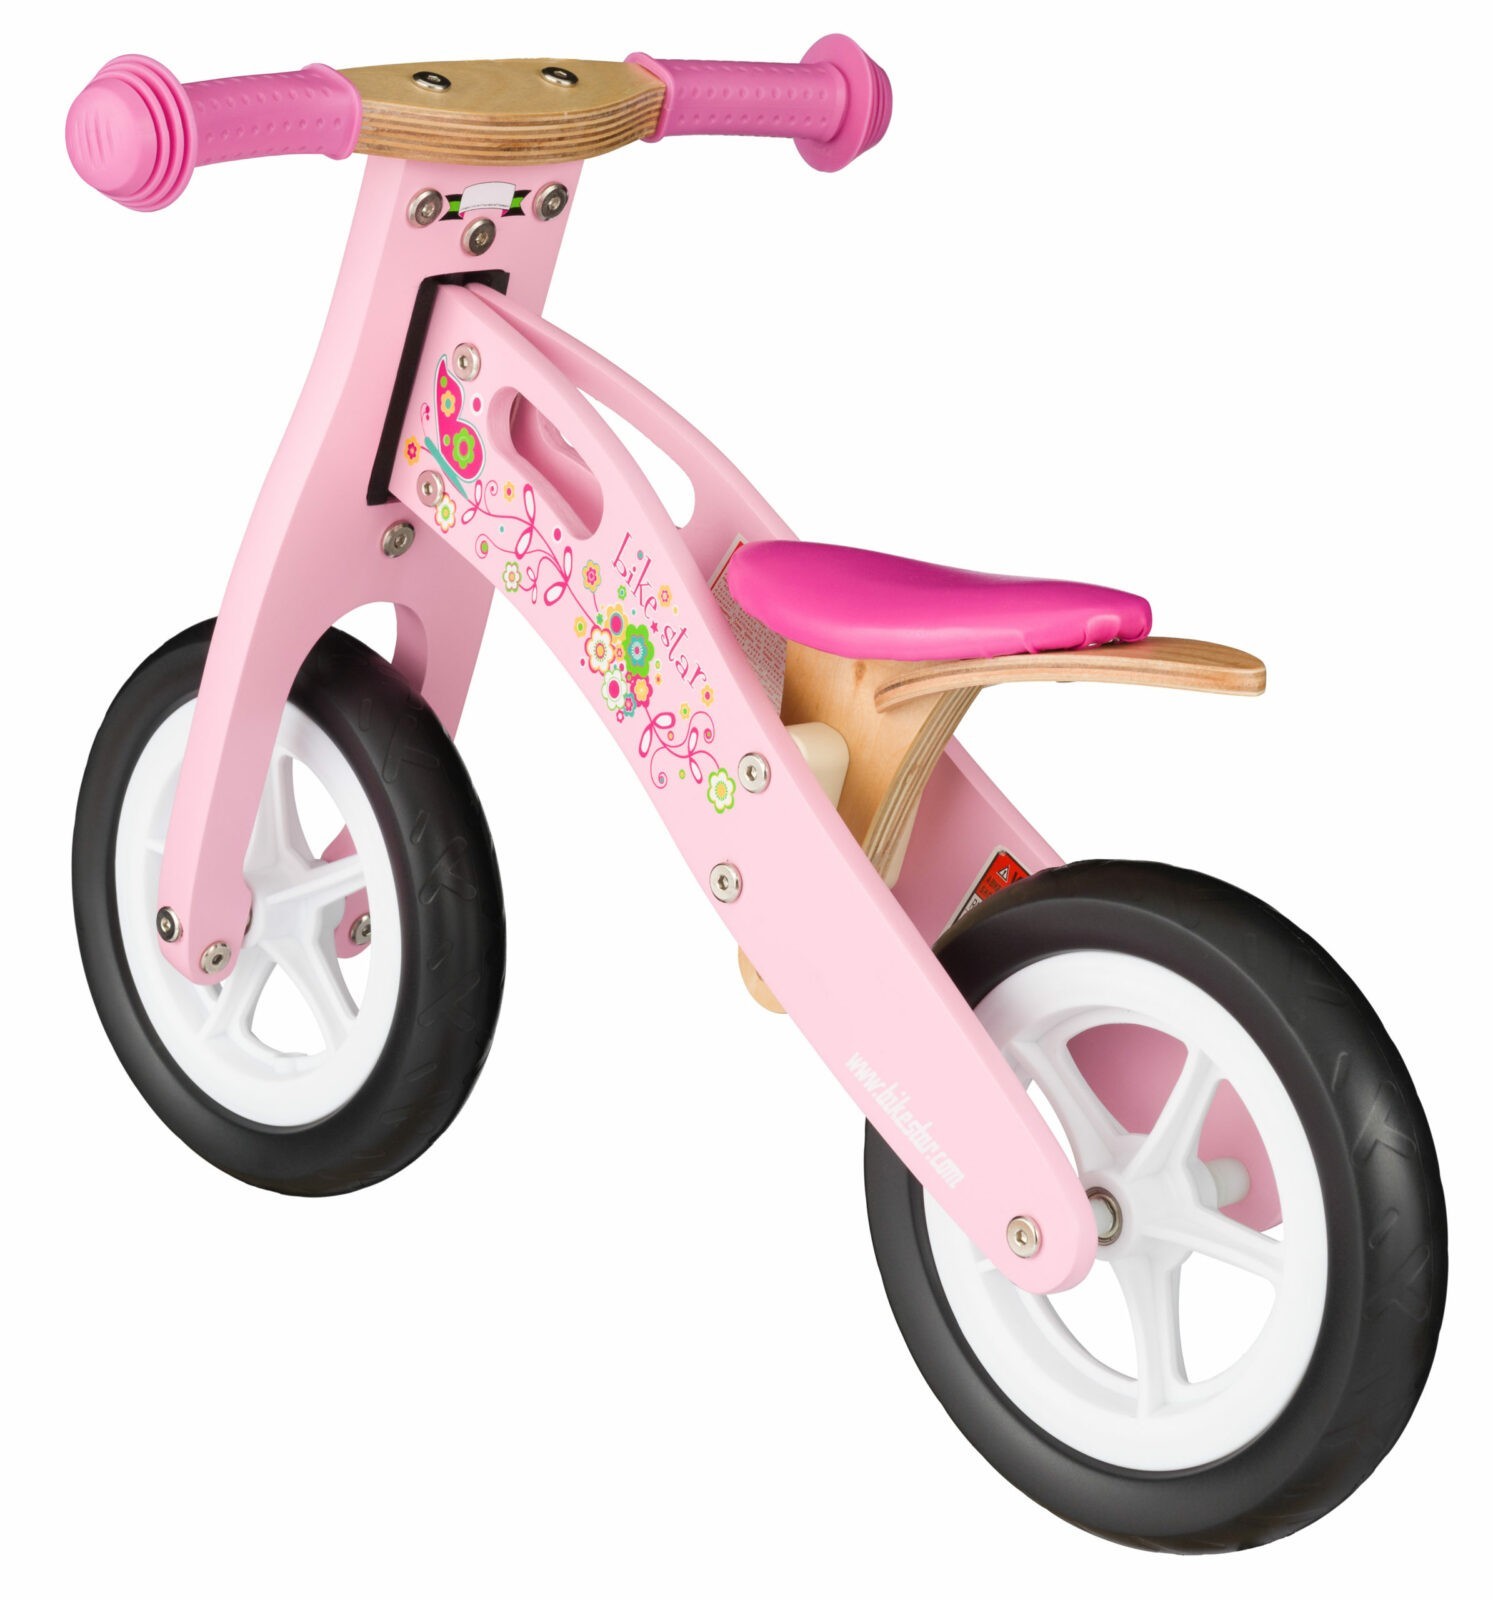 Gaan exegese achterstalligheid Bikestar, houten loopfiets, 10 inch wielen, roze - Fietsdirect